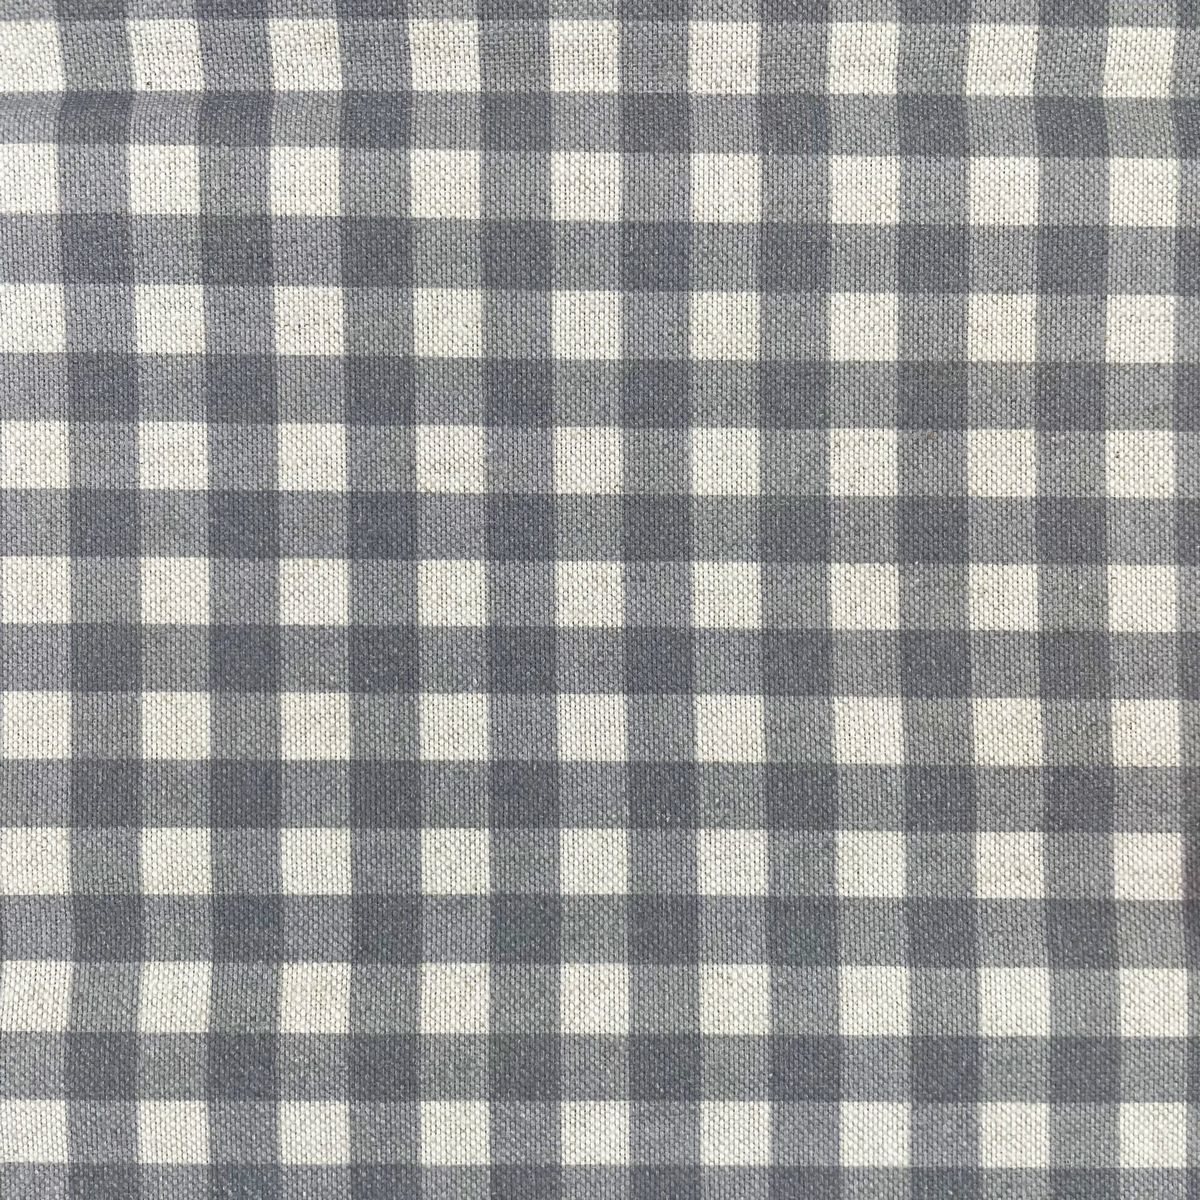 Hillcrest Dove Grey Fabric by Chatham Glyn